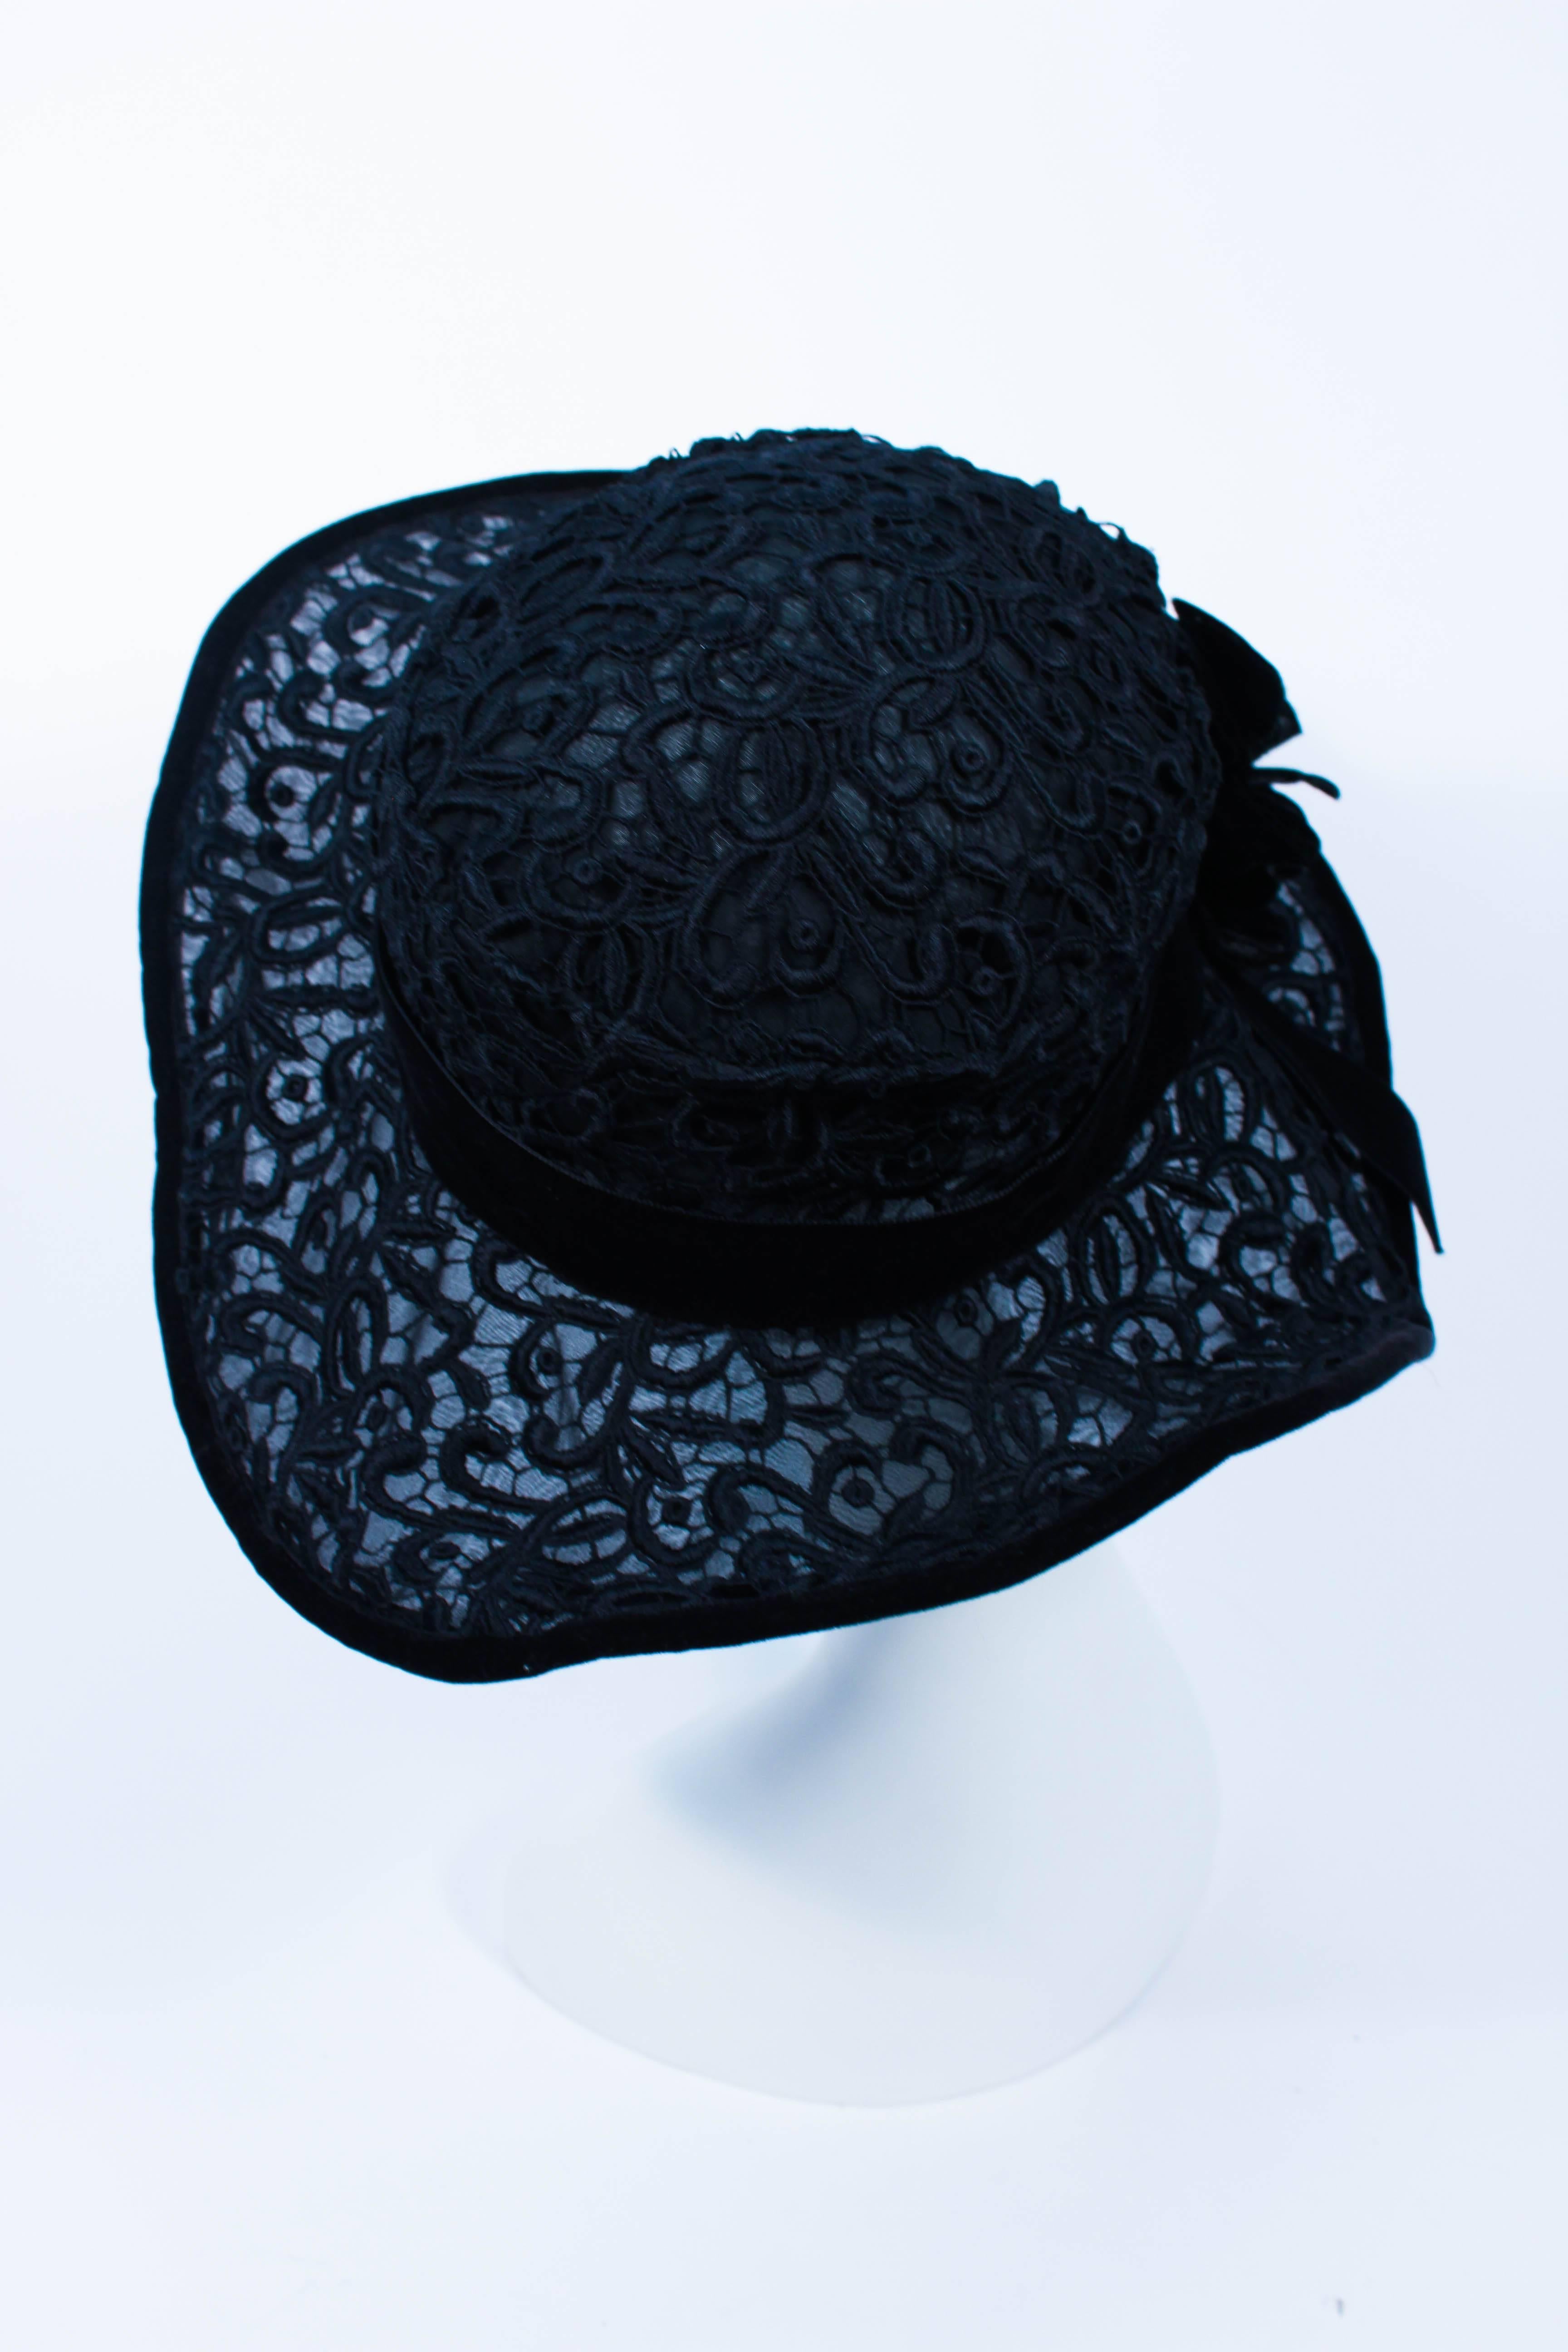 LES HABITUDES LORD LONDON Black Silk and Velvet Floral Hat 2